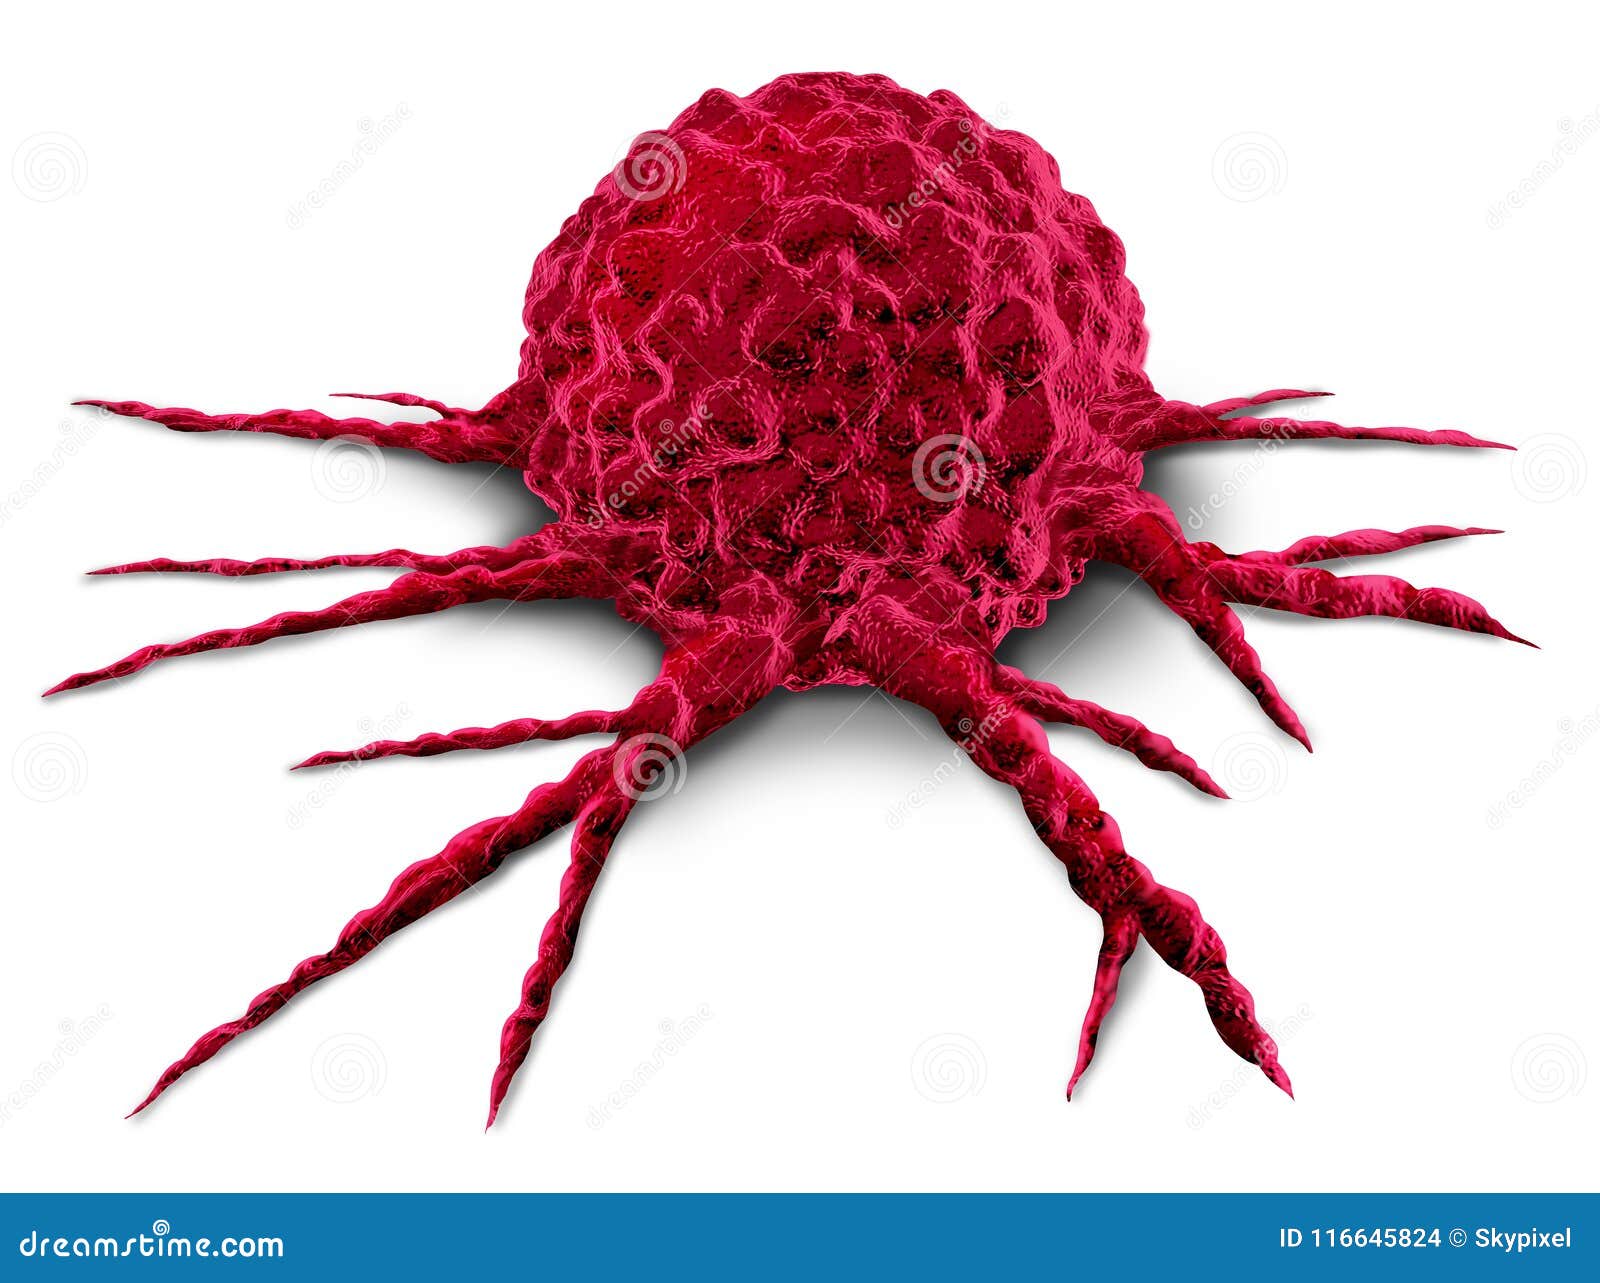 cancer tumor cell